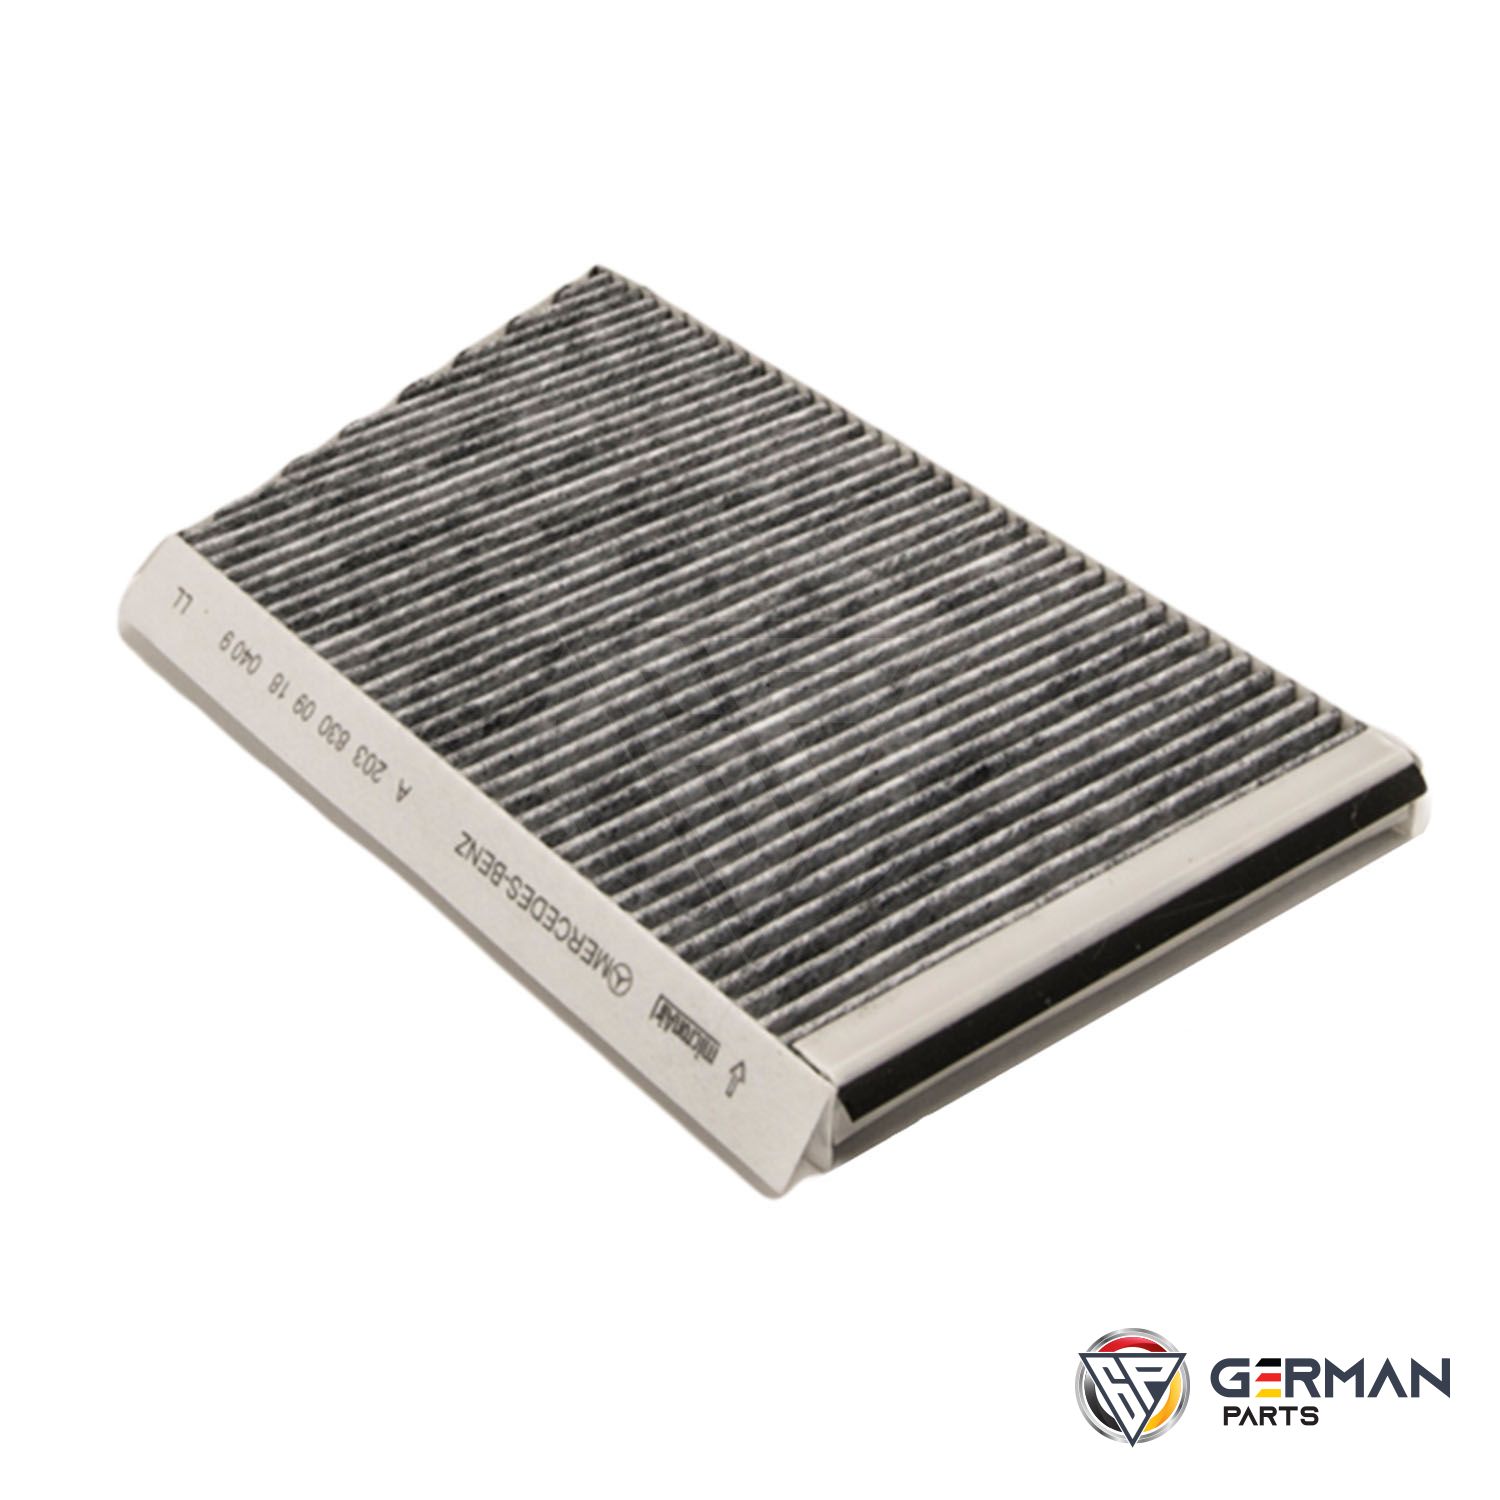 Buy Mercedes Benz Ac Dust Filter 2038300918 - German Parts